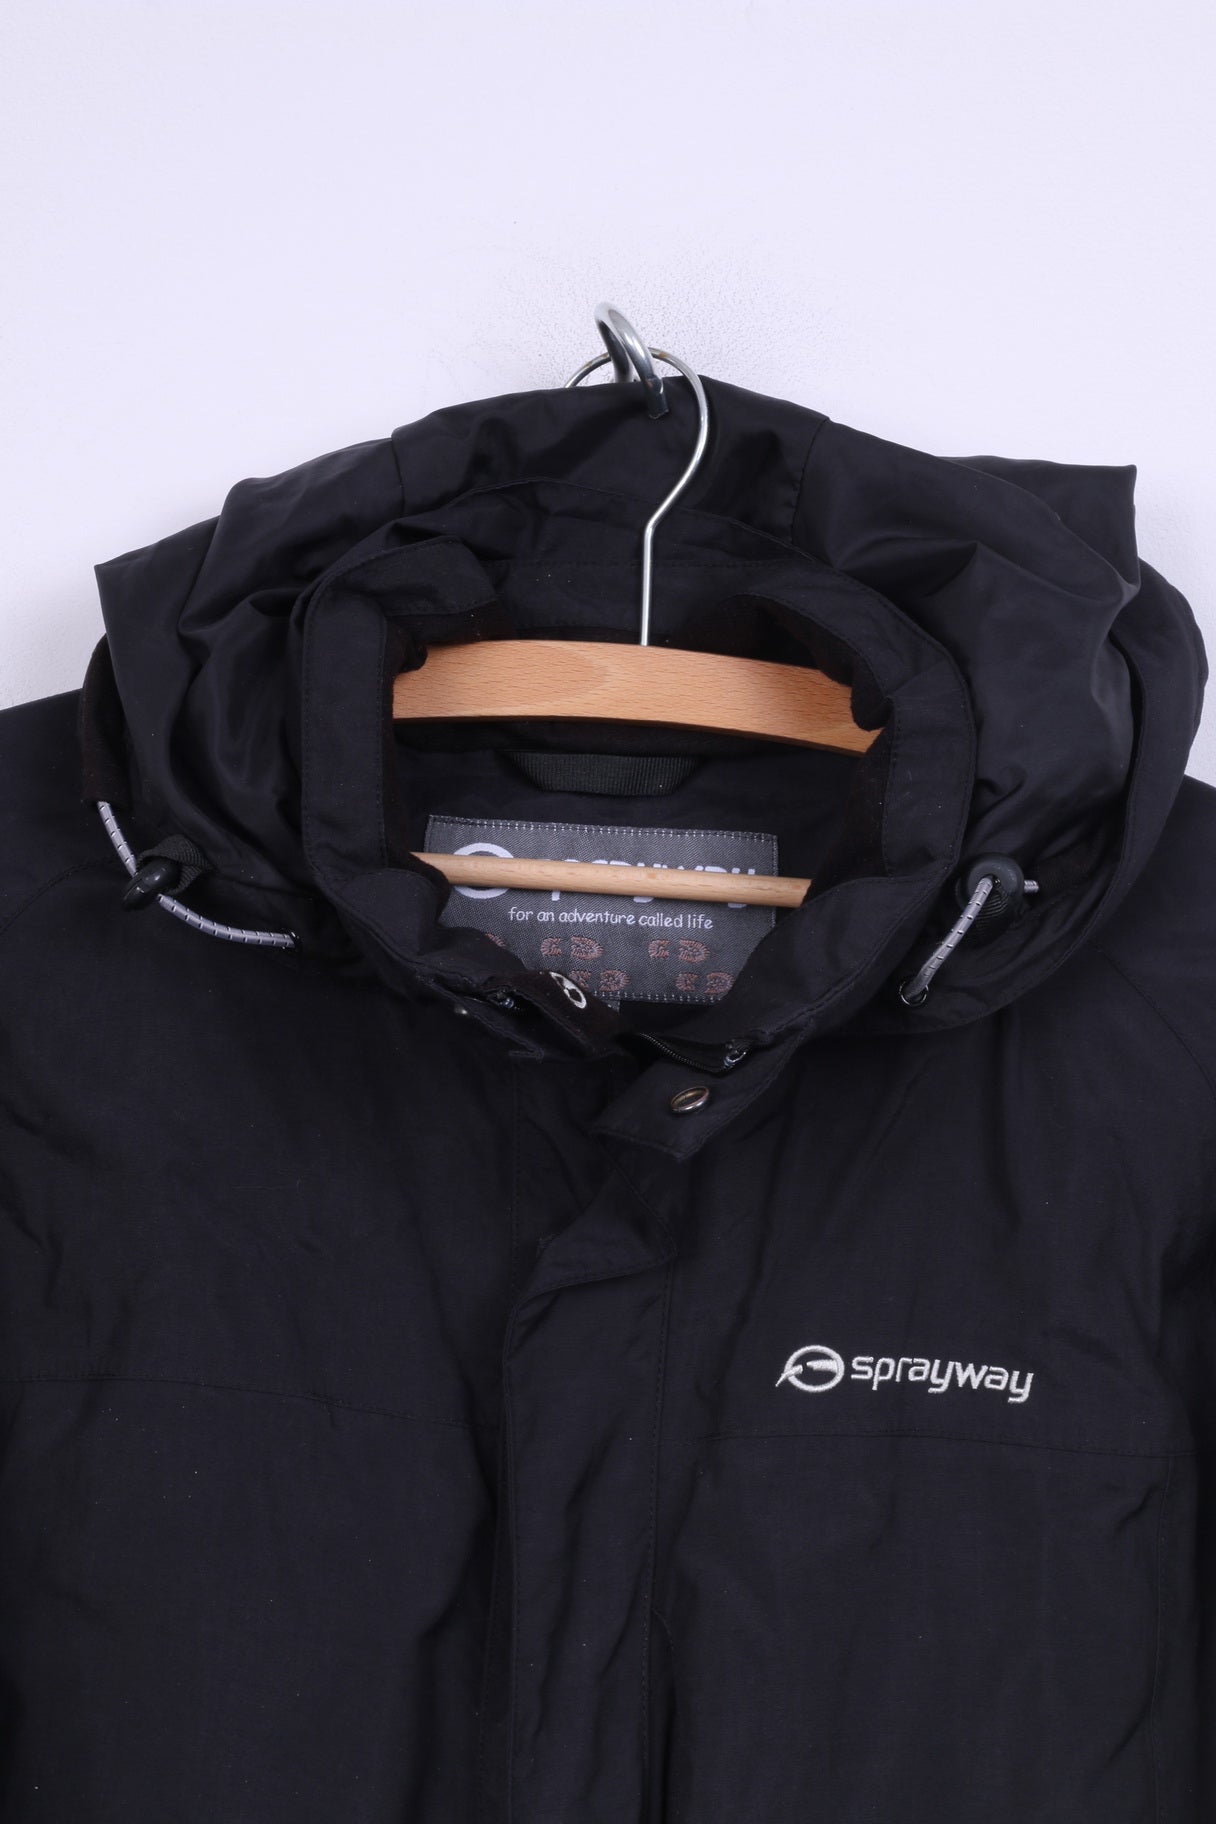 Sprayway Girls 12Age Jacket Hooded Black Full Zipper Nylon Waterproof